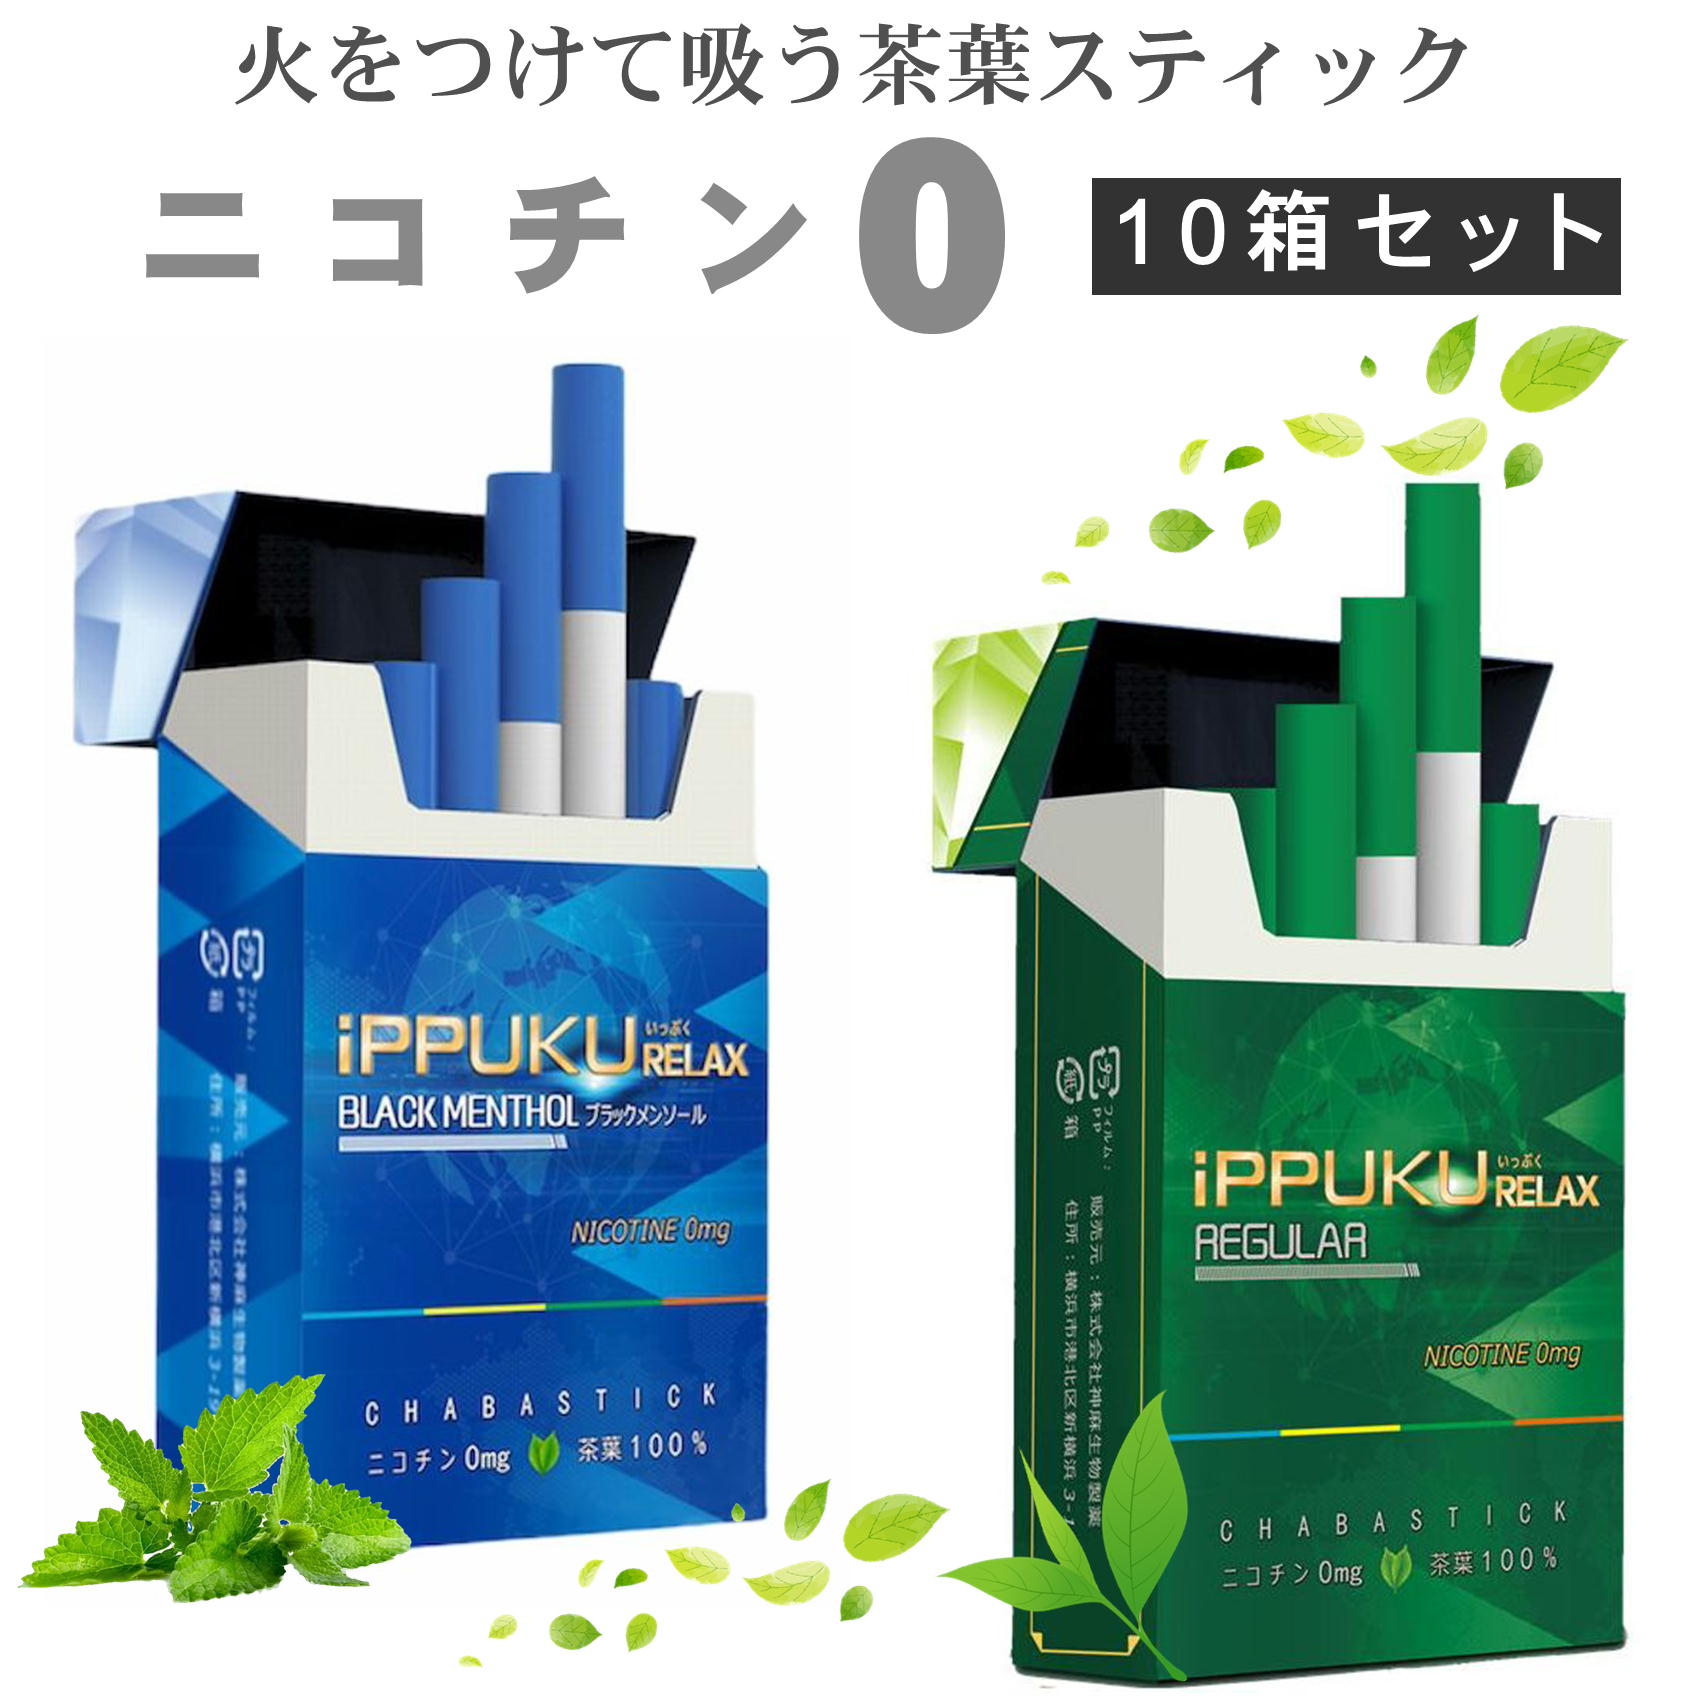 ippuku 3箱セット ニコチン0 ニコチンゼロ タバコ 茶葉 スティック 